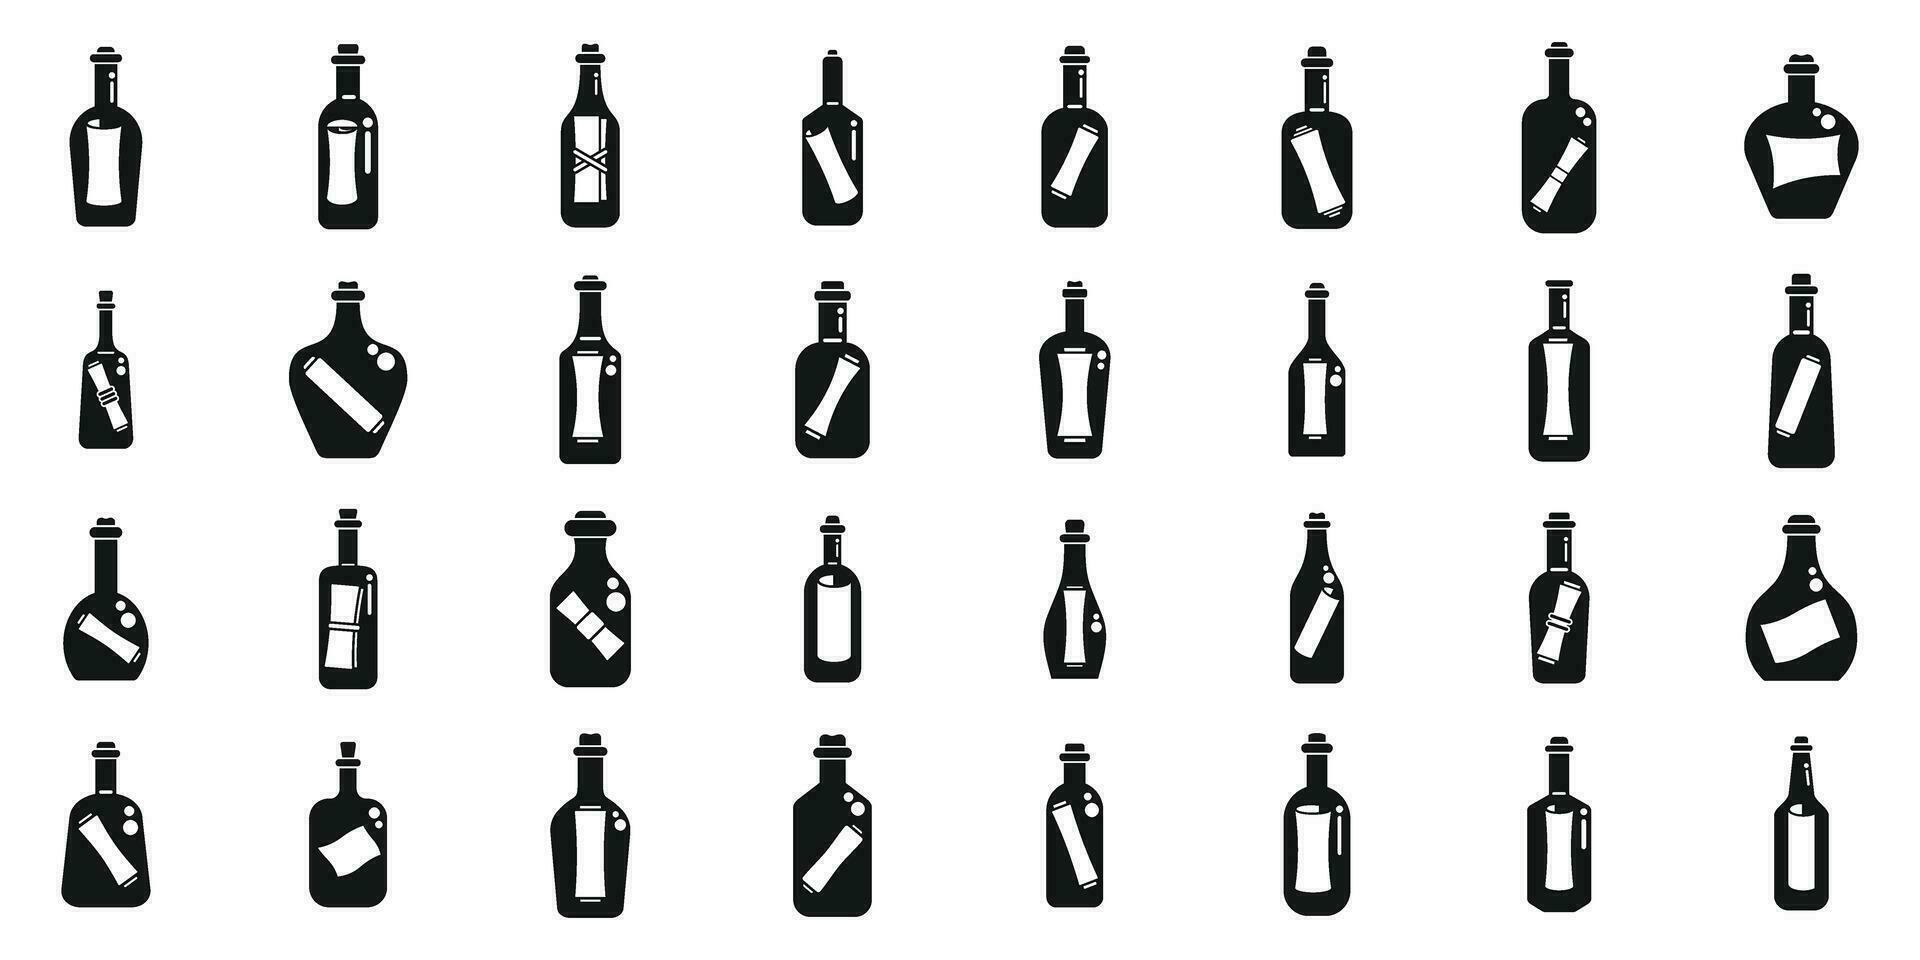 mensagem dentro a garrafa ícones conjunto simples vetor. papel cortiça vetor